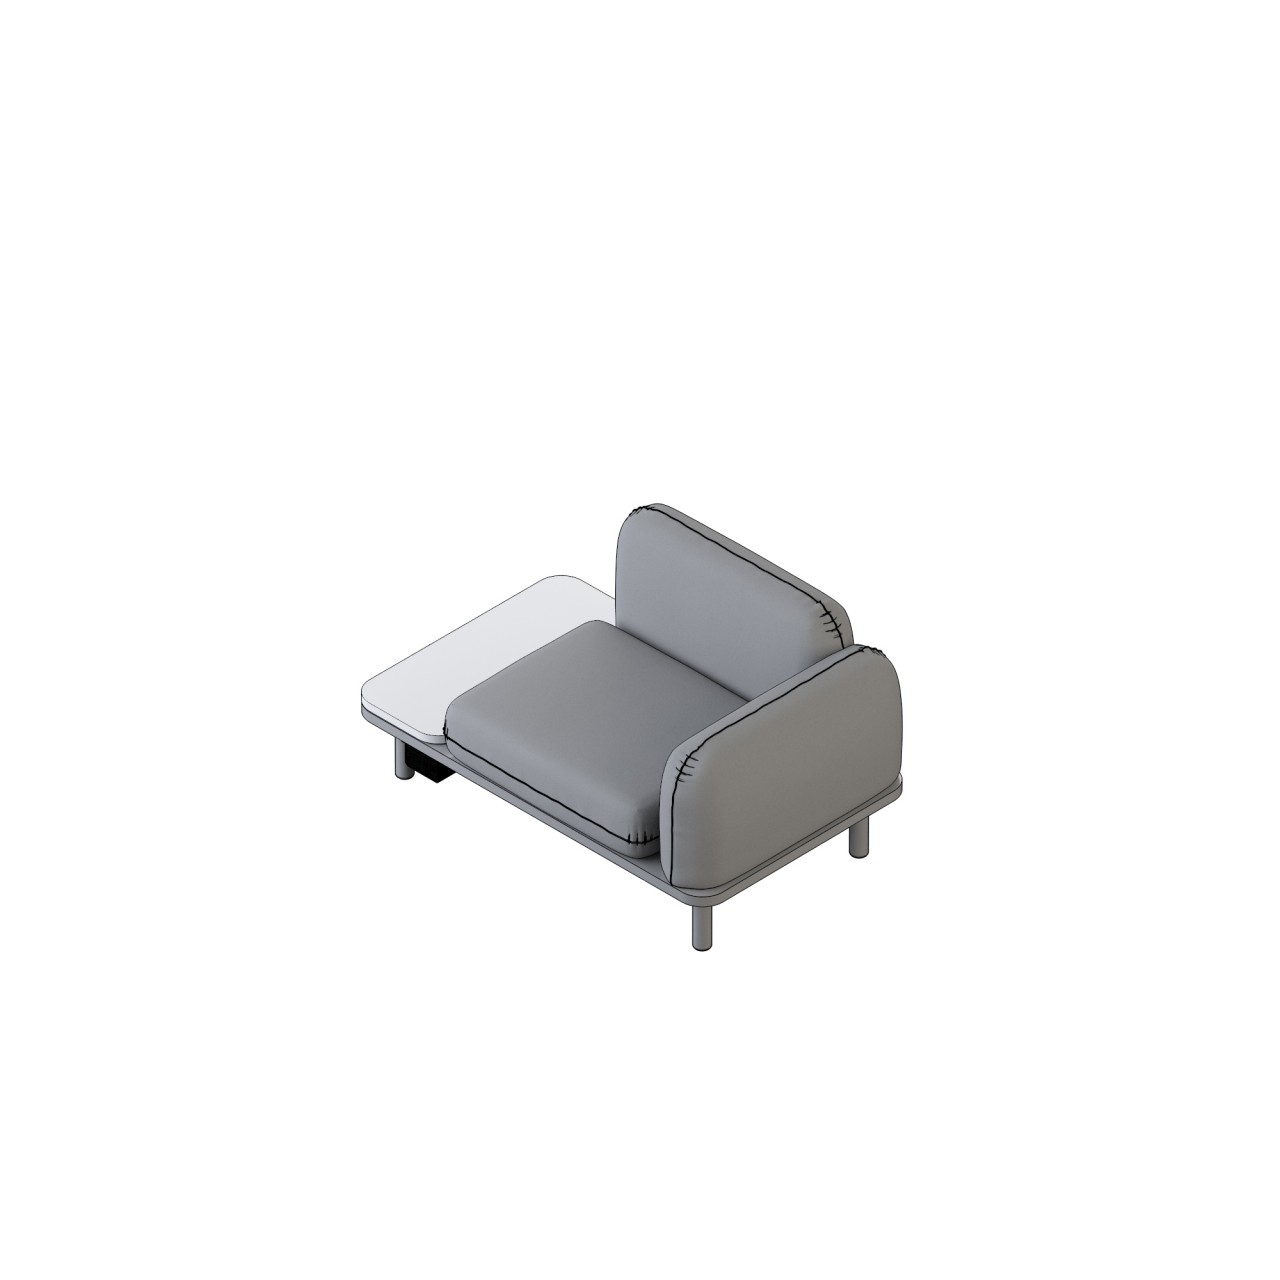 Soft - 24006L
COM 6.25 (arms 1.25, back 1.5, base 1.5, seat 2.5)